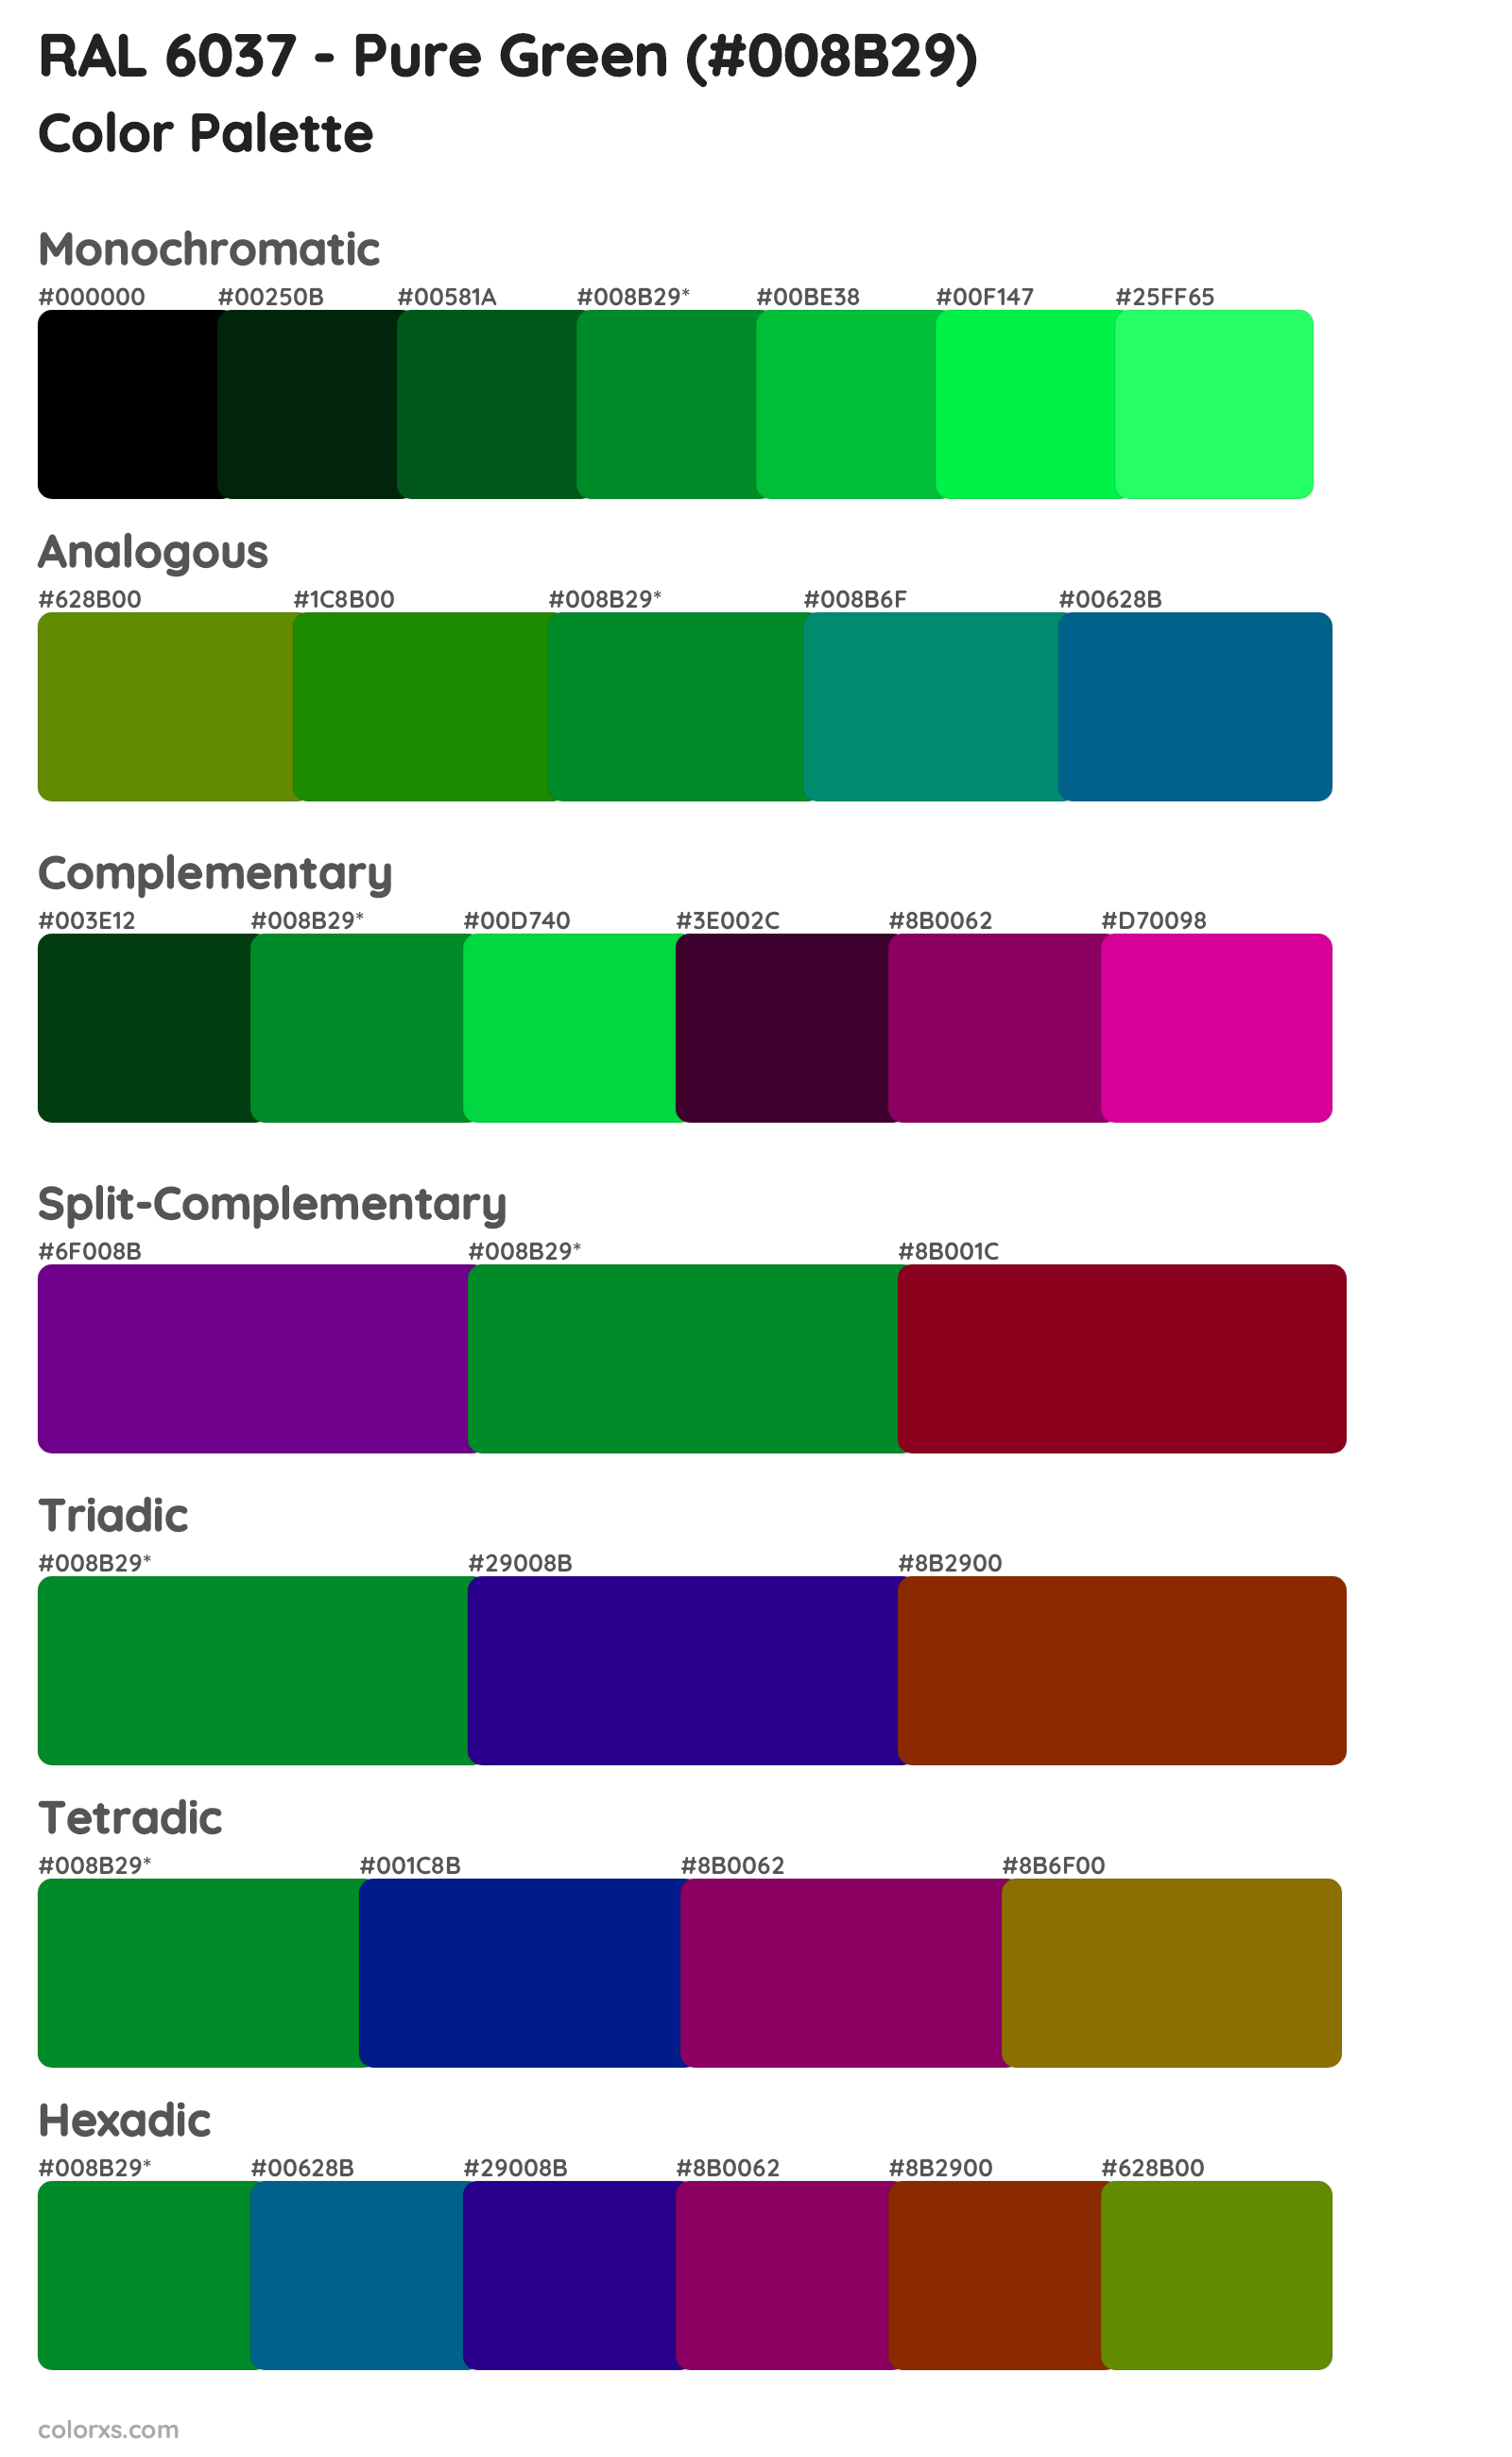 RAL 6037 - Pure Green Color Scheme Palettes